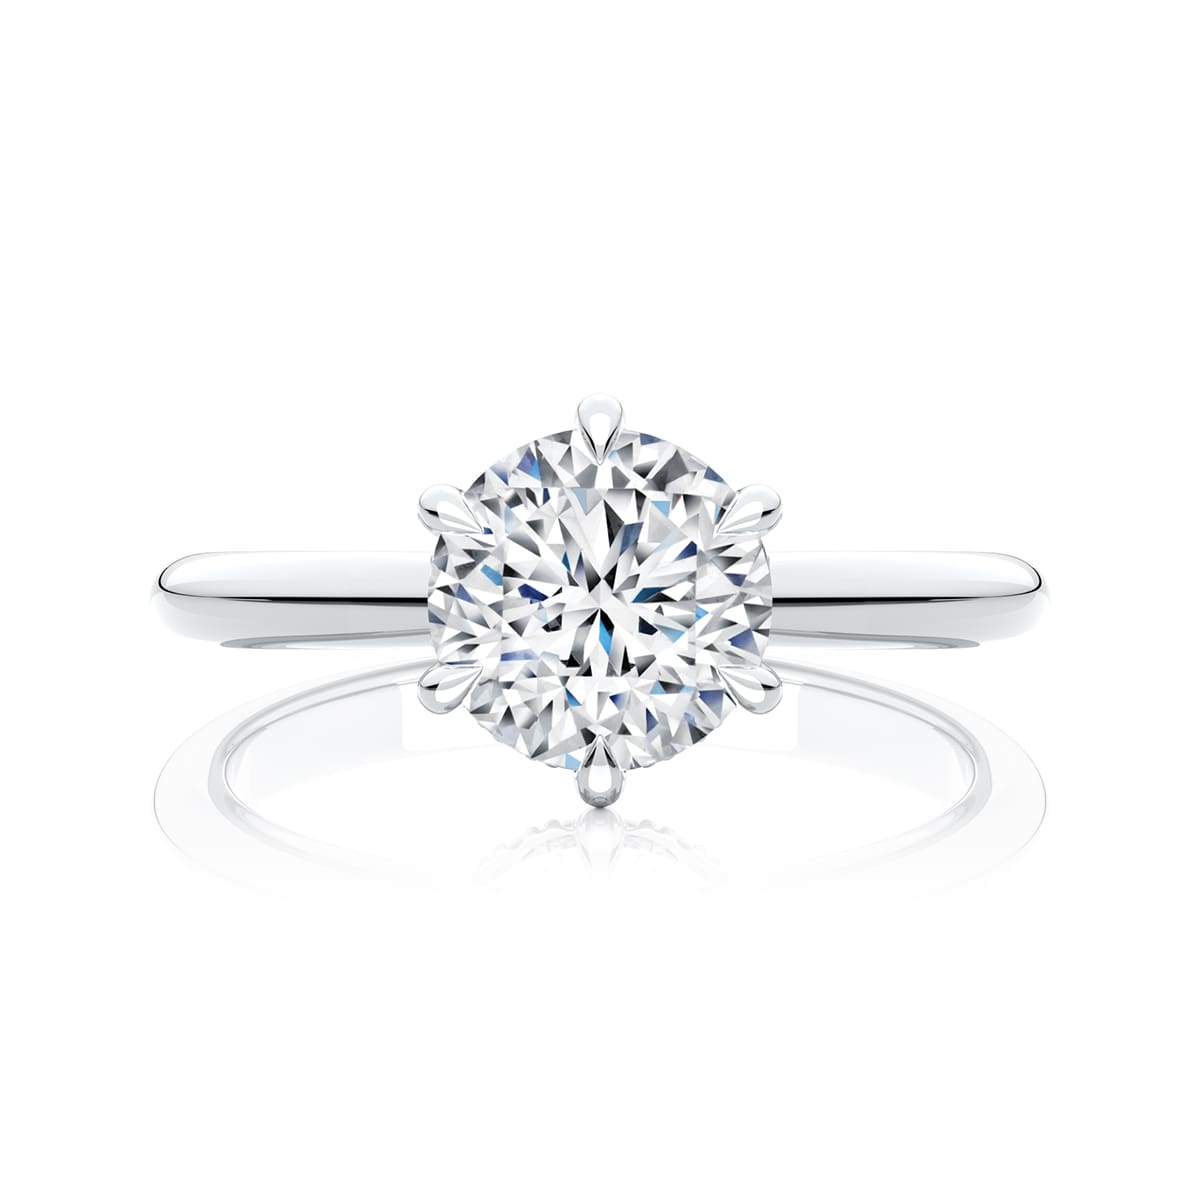 Rebarto Round Diamond Hidden Halo Engagement Ring in Platinum